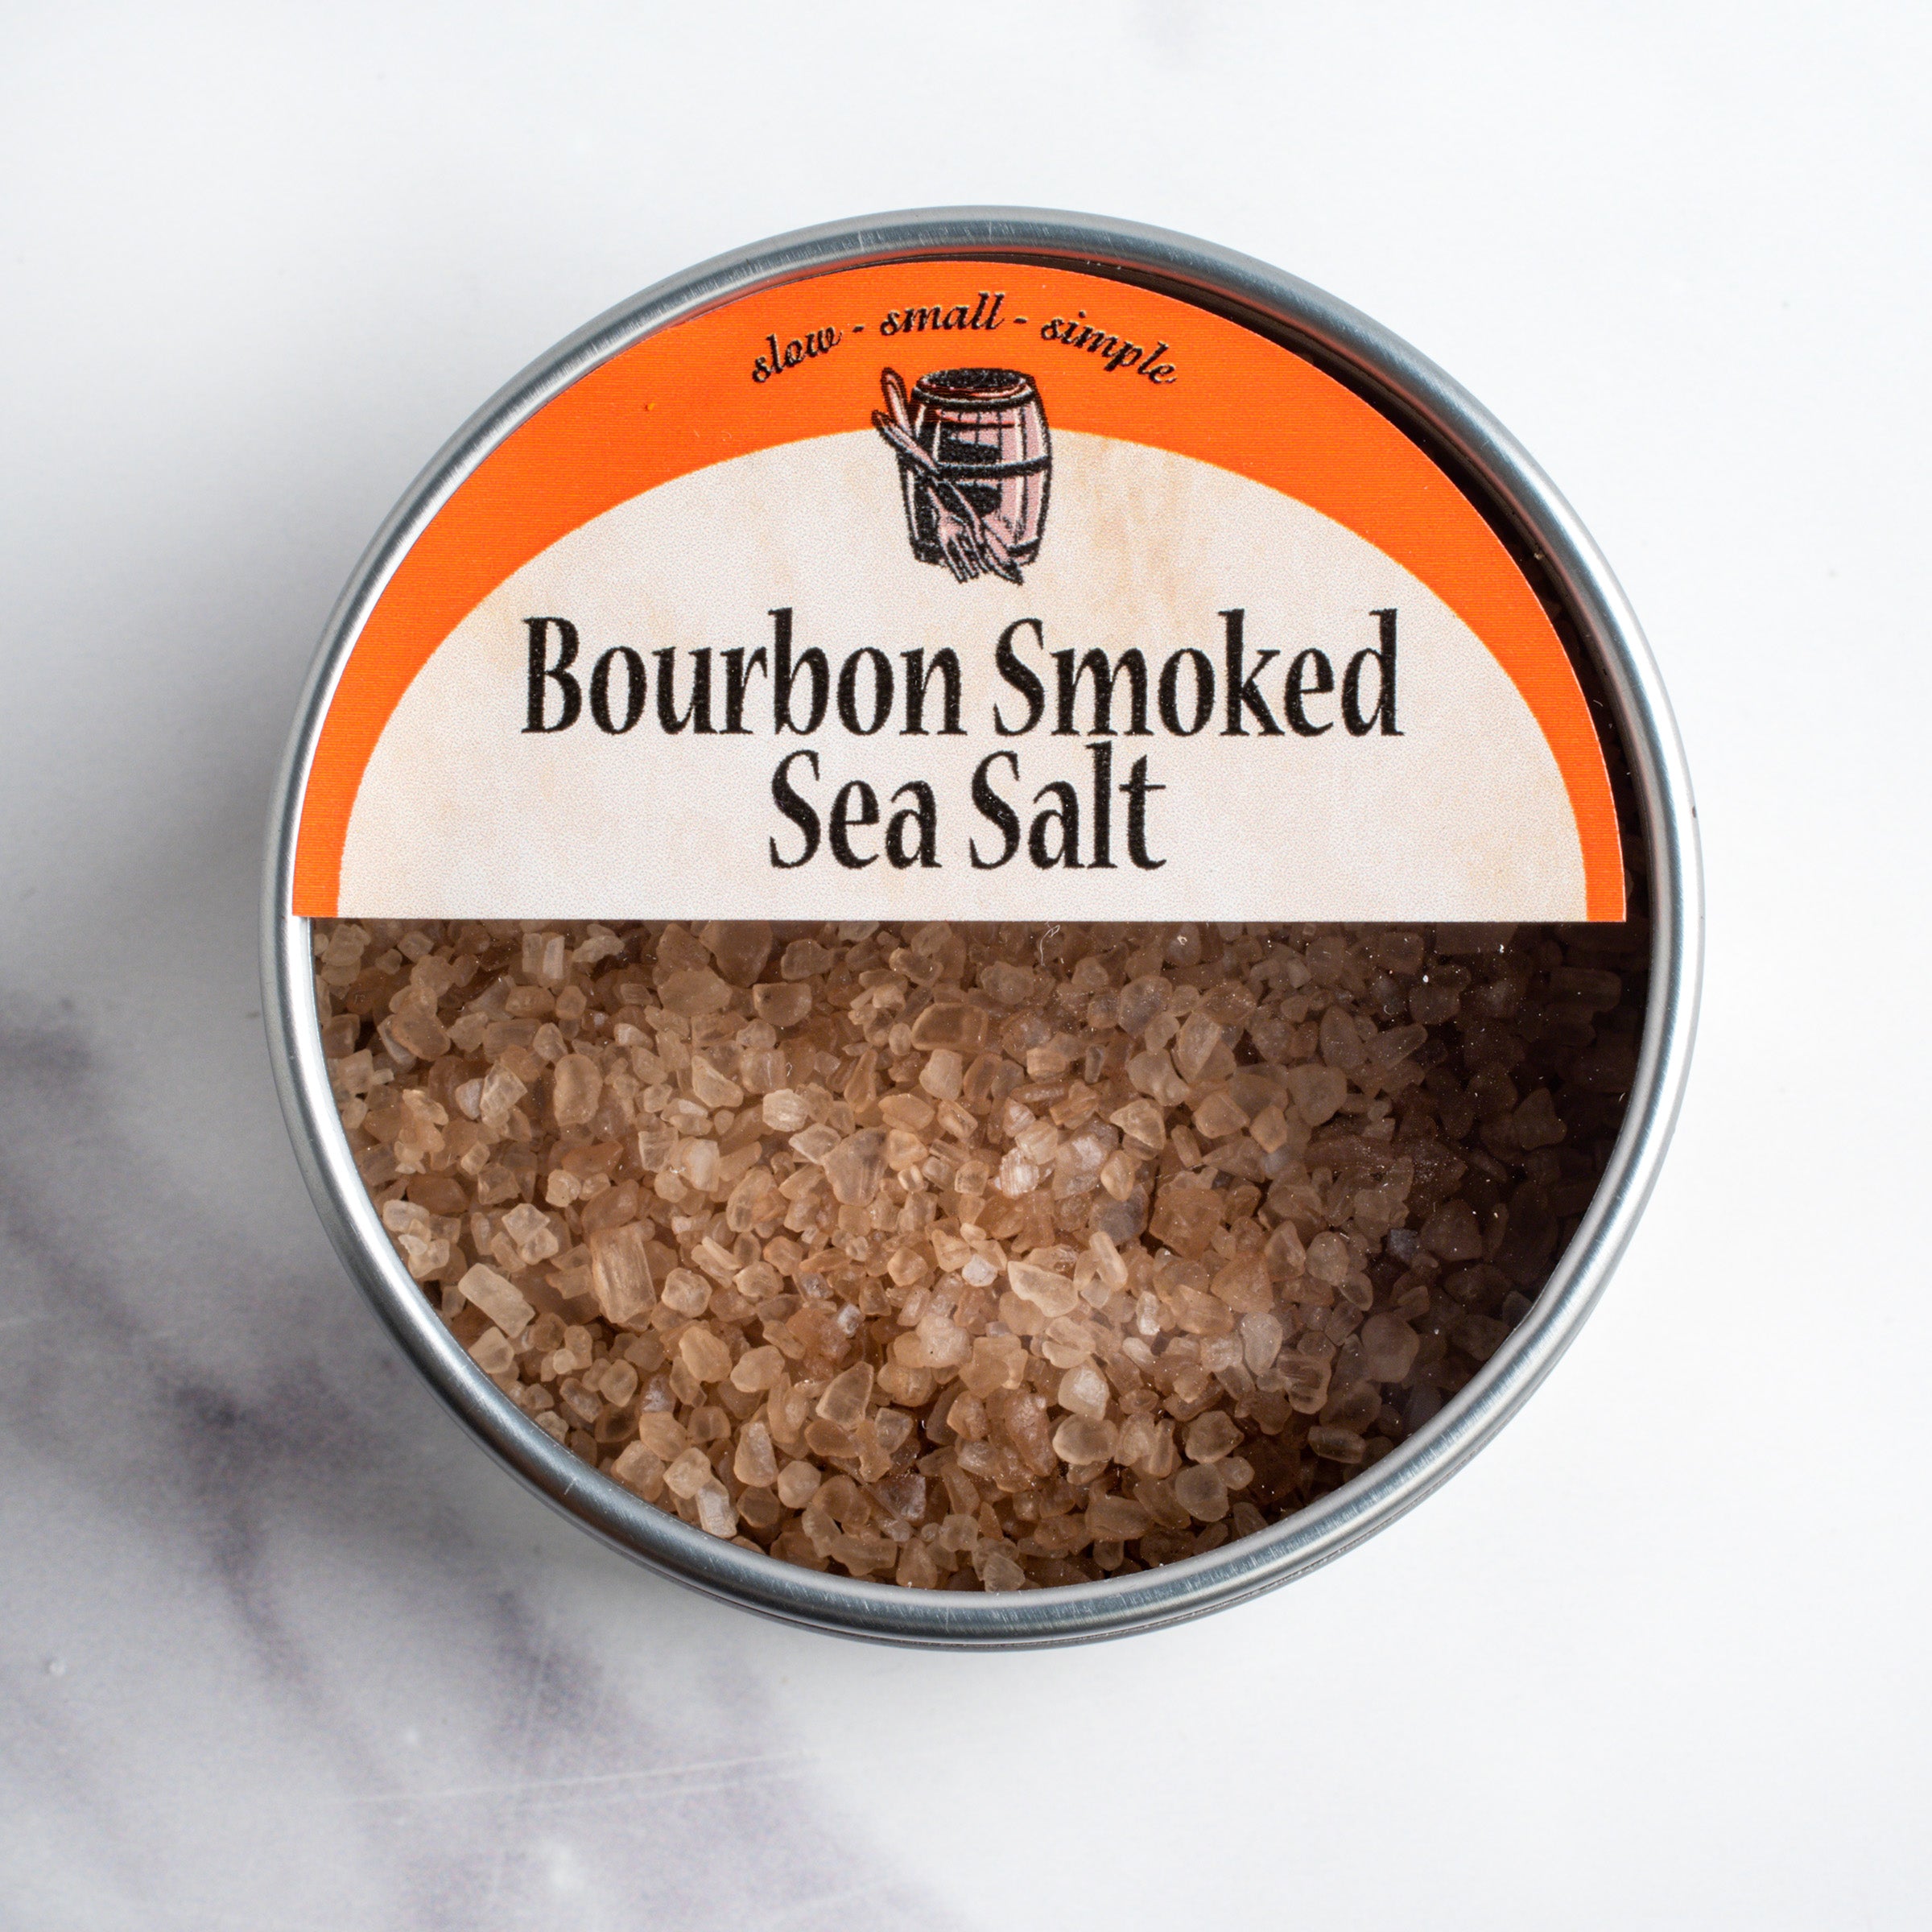 – Seasonings Sea igourmet & Smoked Spices Salt/Bourbon Barrel/Rubs, Bourbon